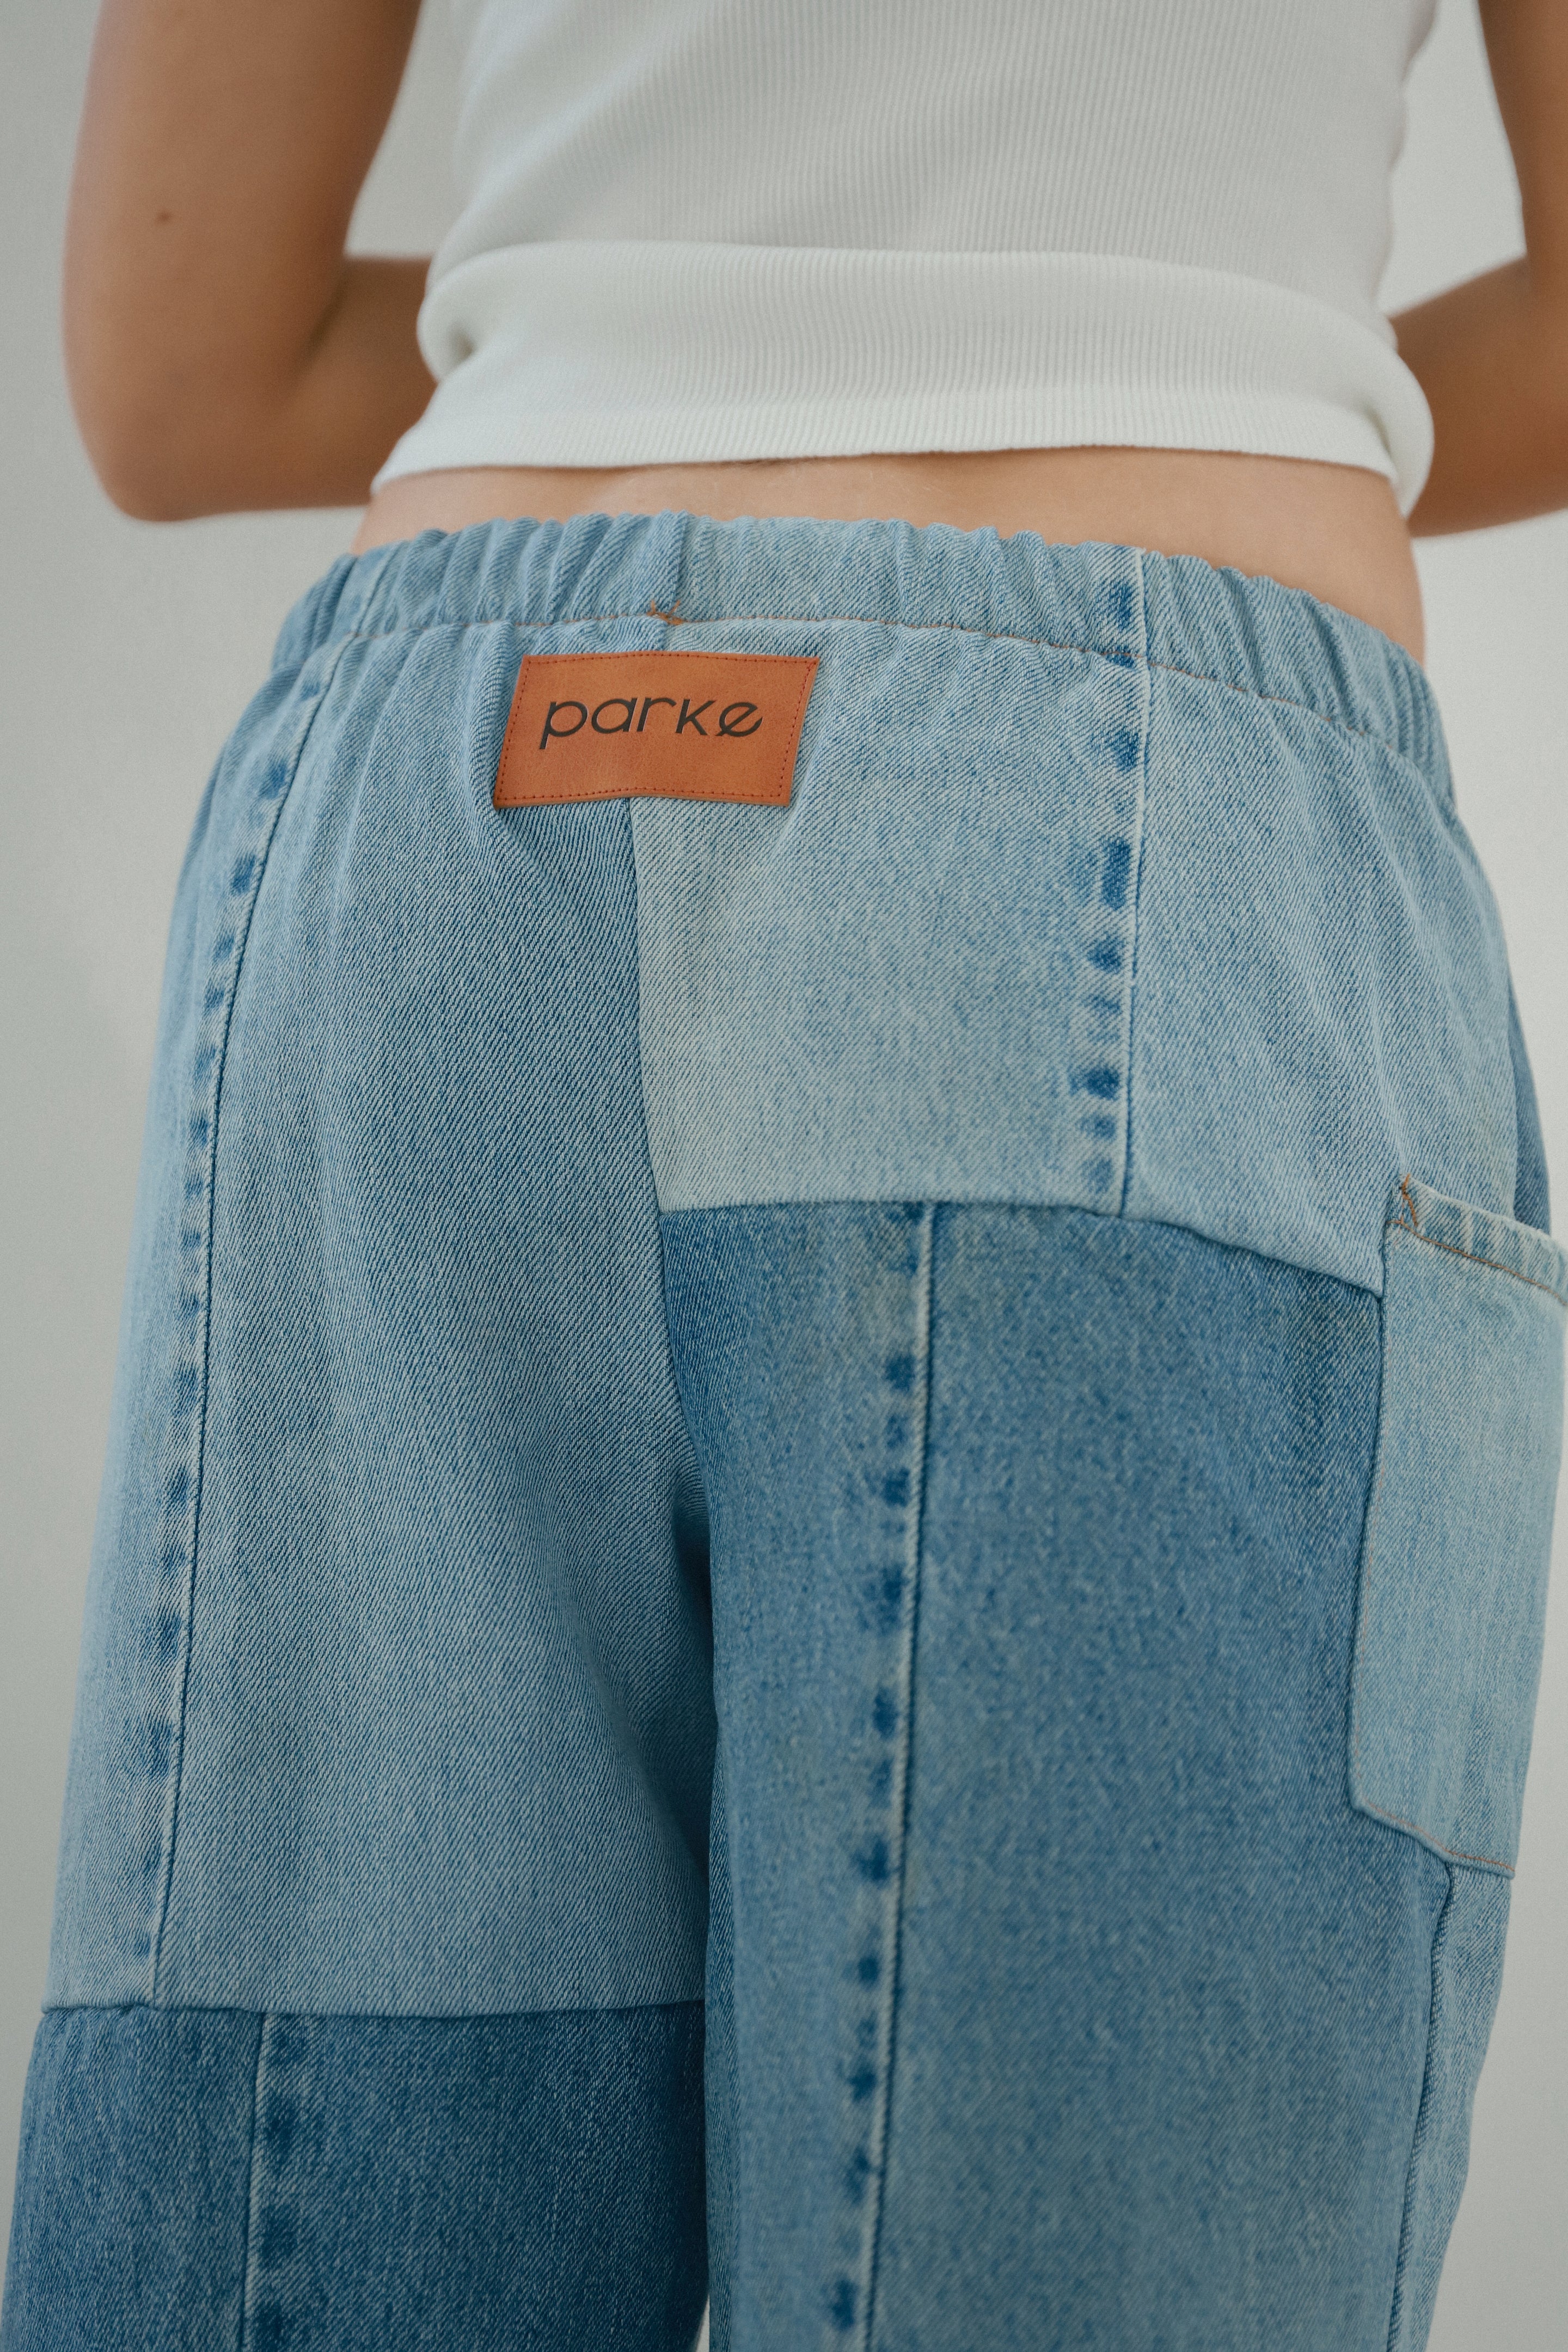 Defining Features: What Helps Us Keep Our Jeans Up | by Felix Bojan  Pecarski | OK Felix | Medium